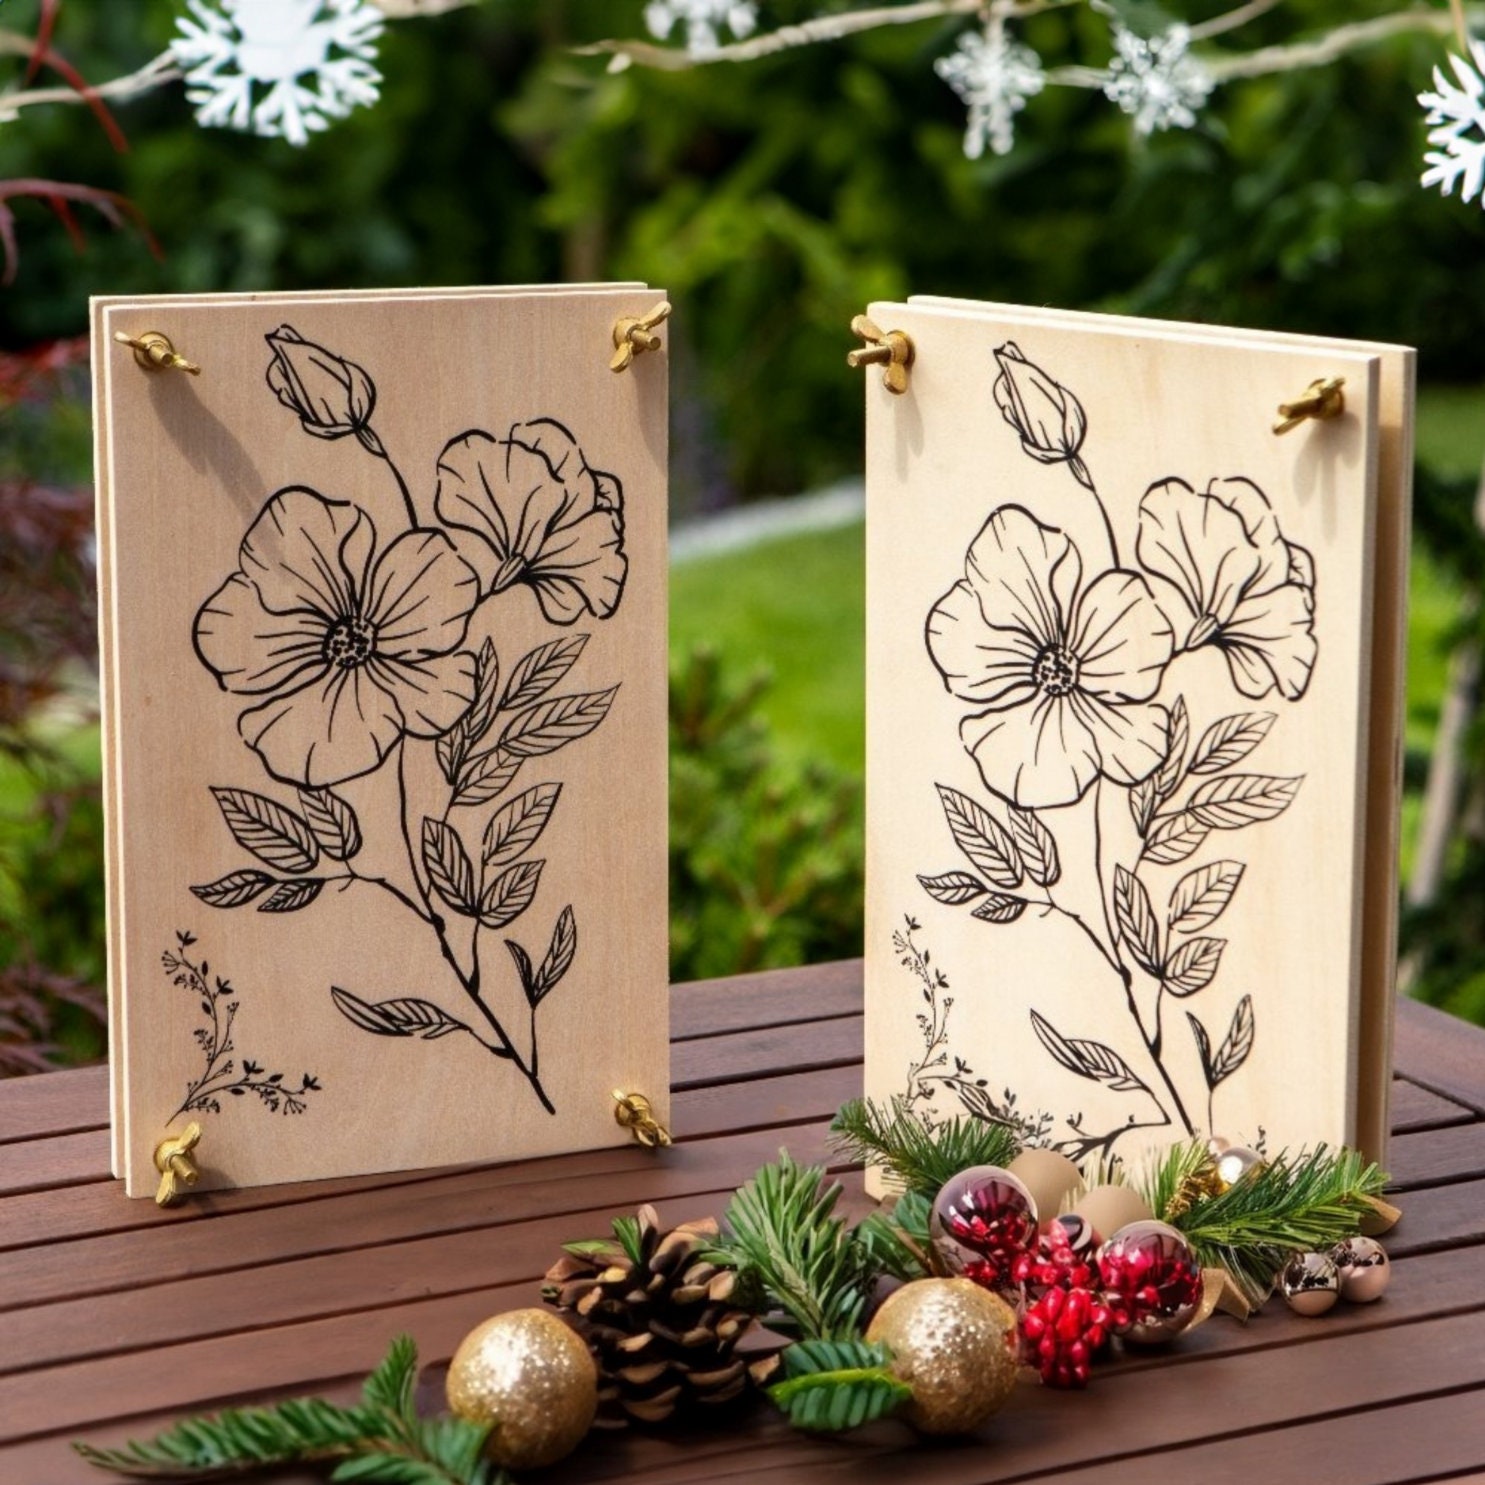 Personalized Flower Press Kit, Wooden Flower Press, Pressed Flower Kit  Herbarium, 5 Minute Crafts, Wildflowers Nature Lover Gift, Flower Art 